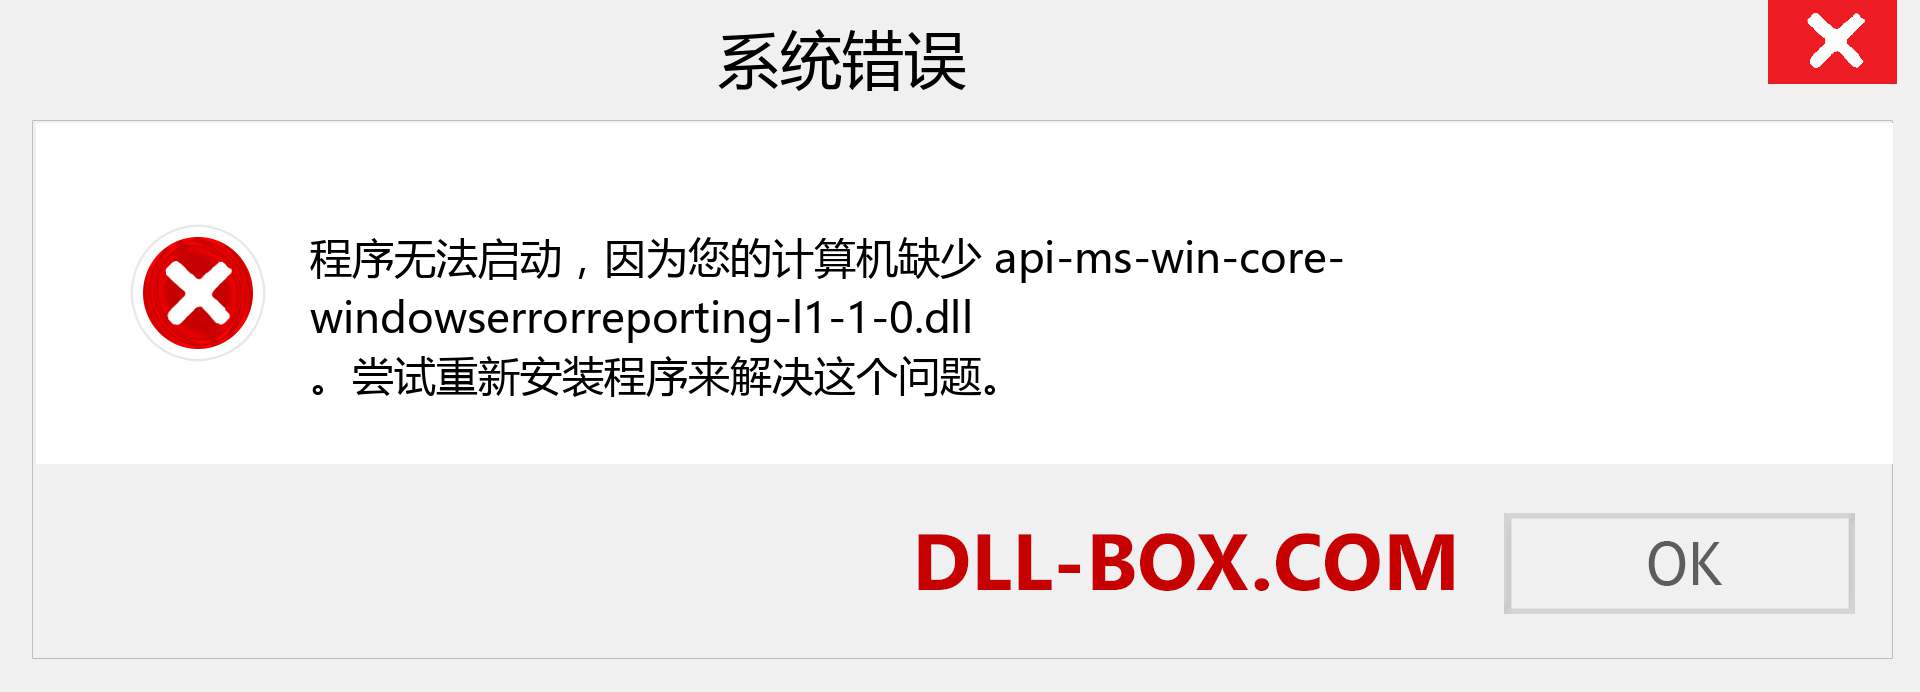 api-ms-win-core-windowserrorreporting-l1-1-0.dll 文件丢失？。 适用于 Windows 7、8、10 的下载 - 修复 Windows、照片、图像上的 api-ms-win-core-windowserrorreporting-l1-1-0 dll 丢失错误